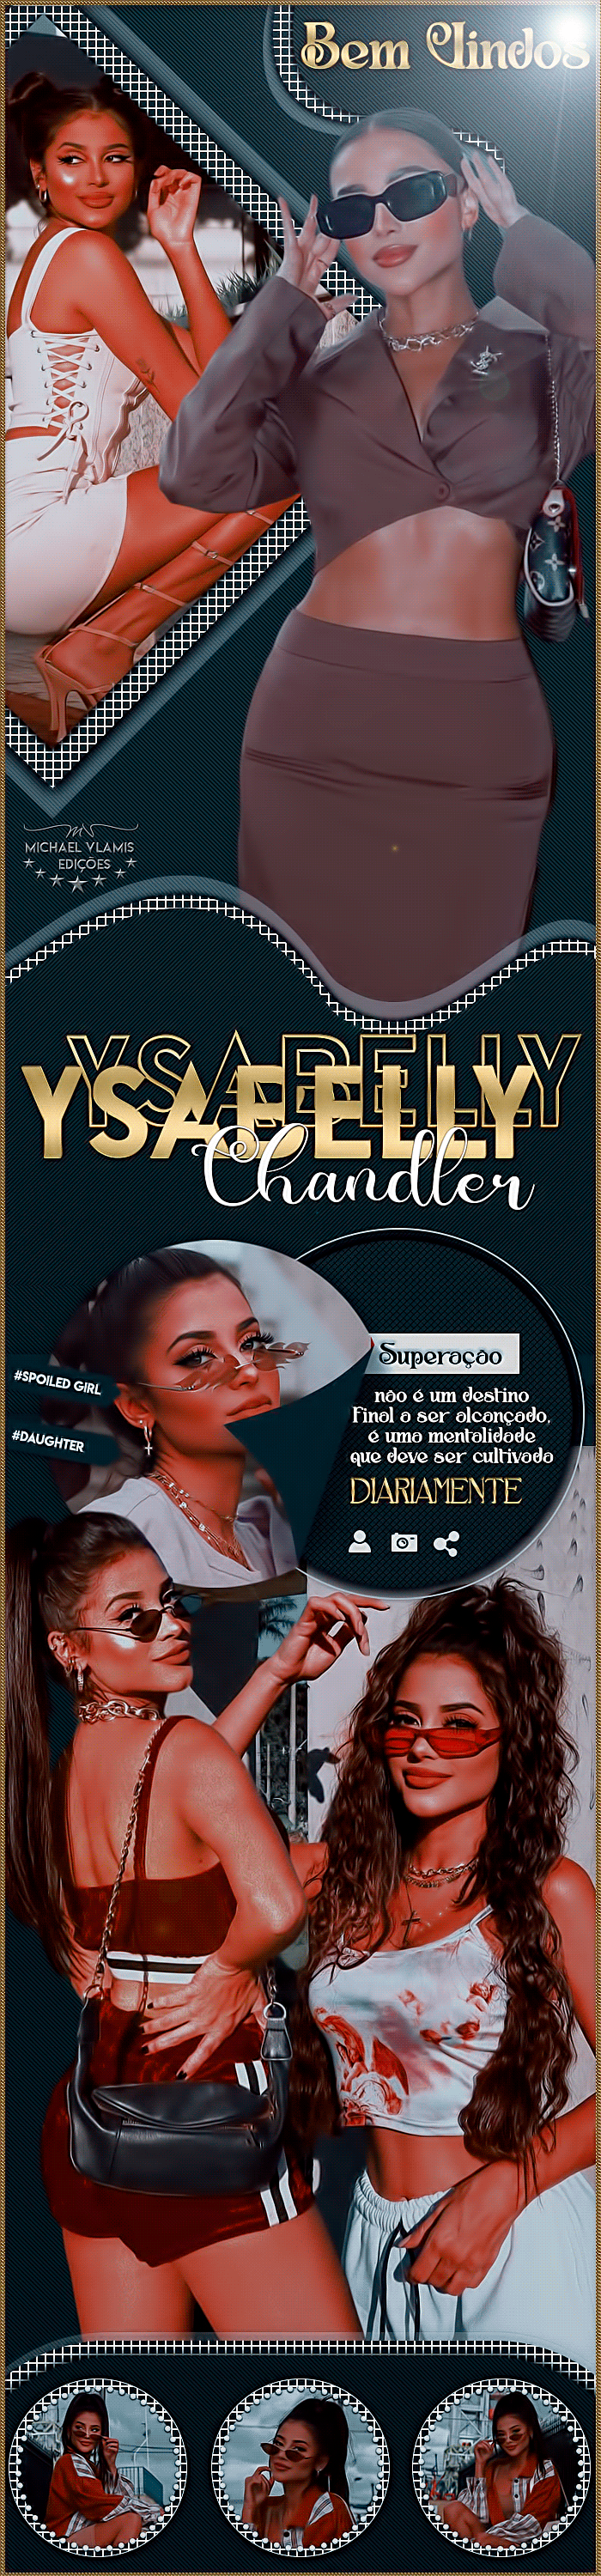 Ysabelly-Chandler.gif